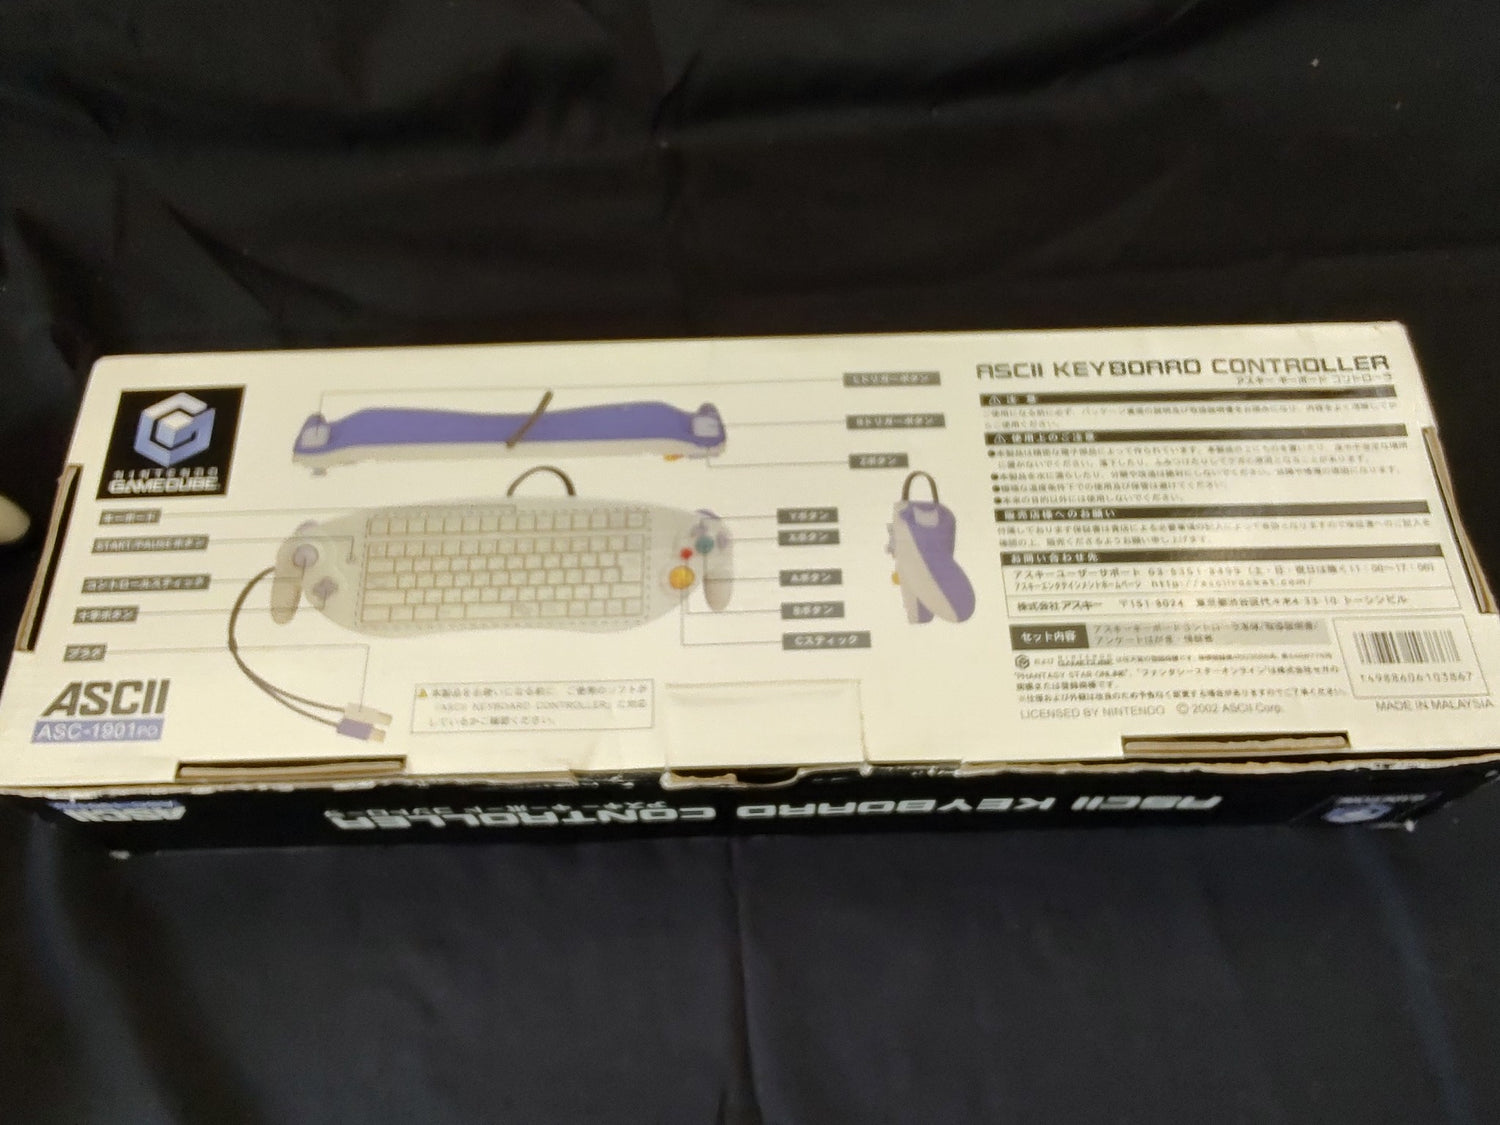 Nintendo GameCube ASCII keyboard Controller ACS-1901PO, not tested 